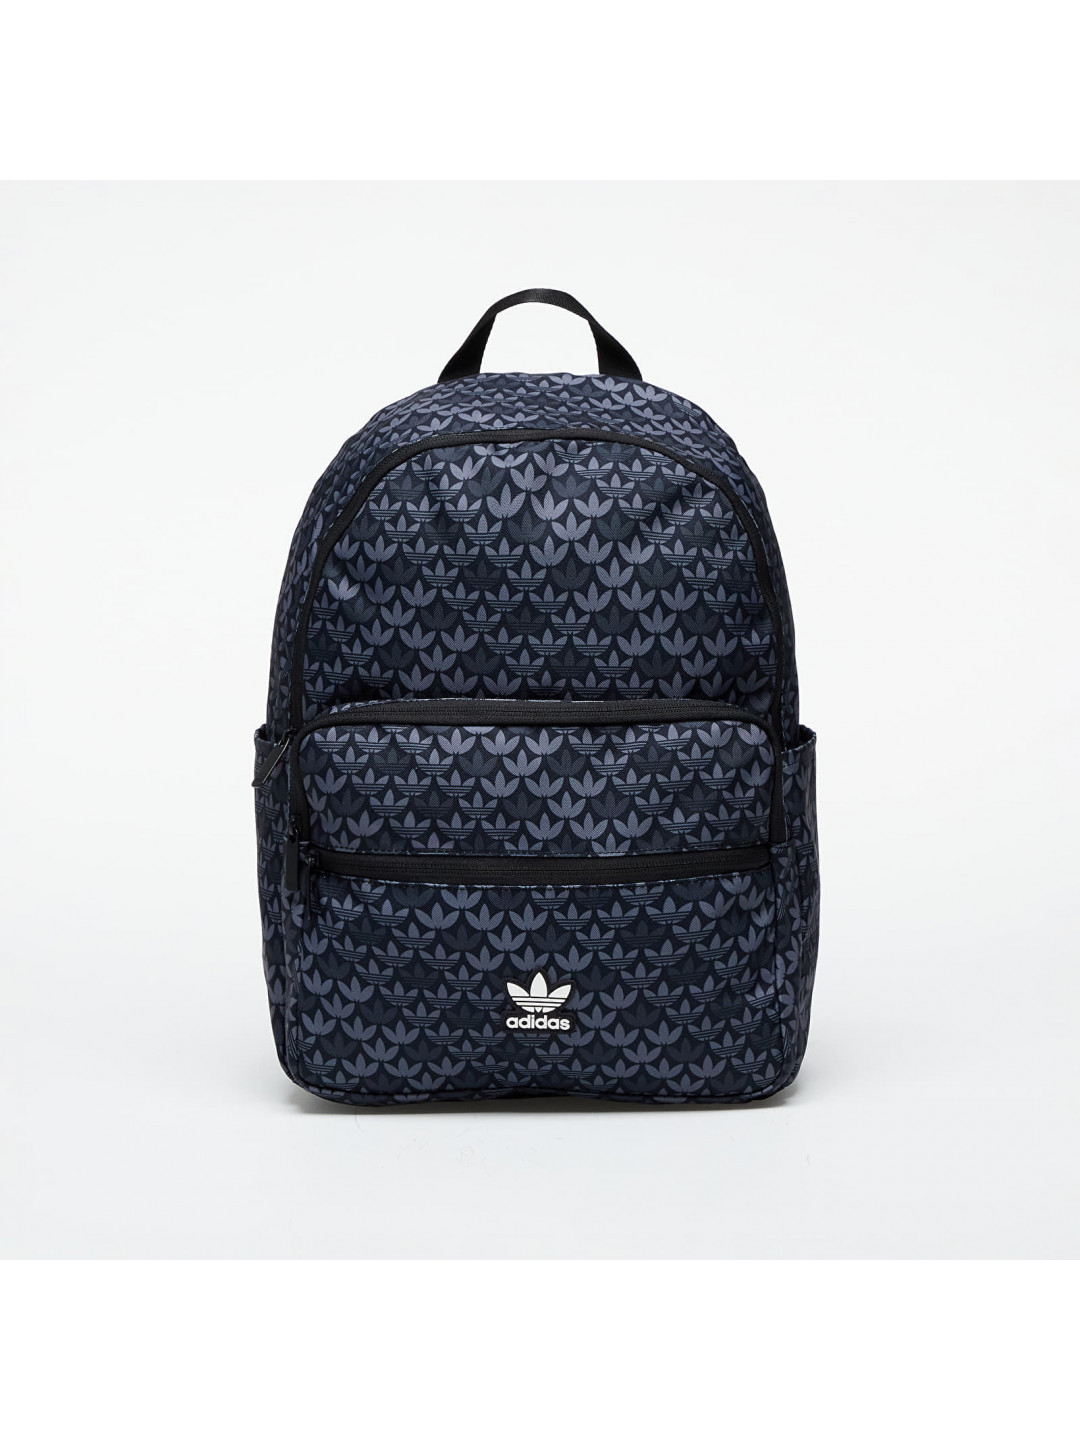 Adidas Originals Monogram Backpack Black